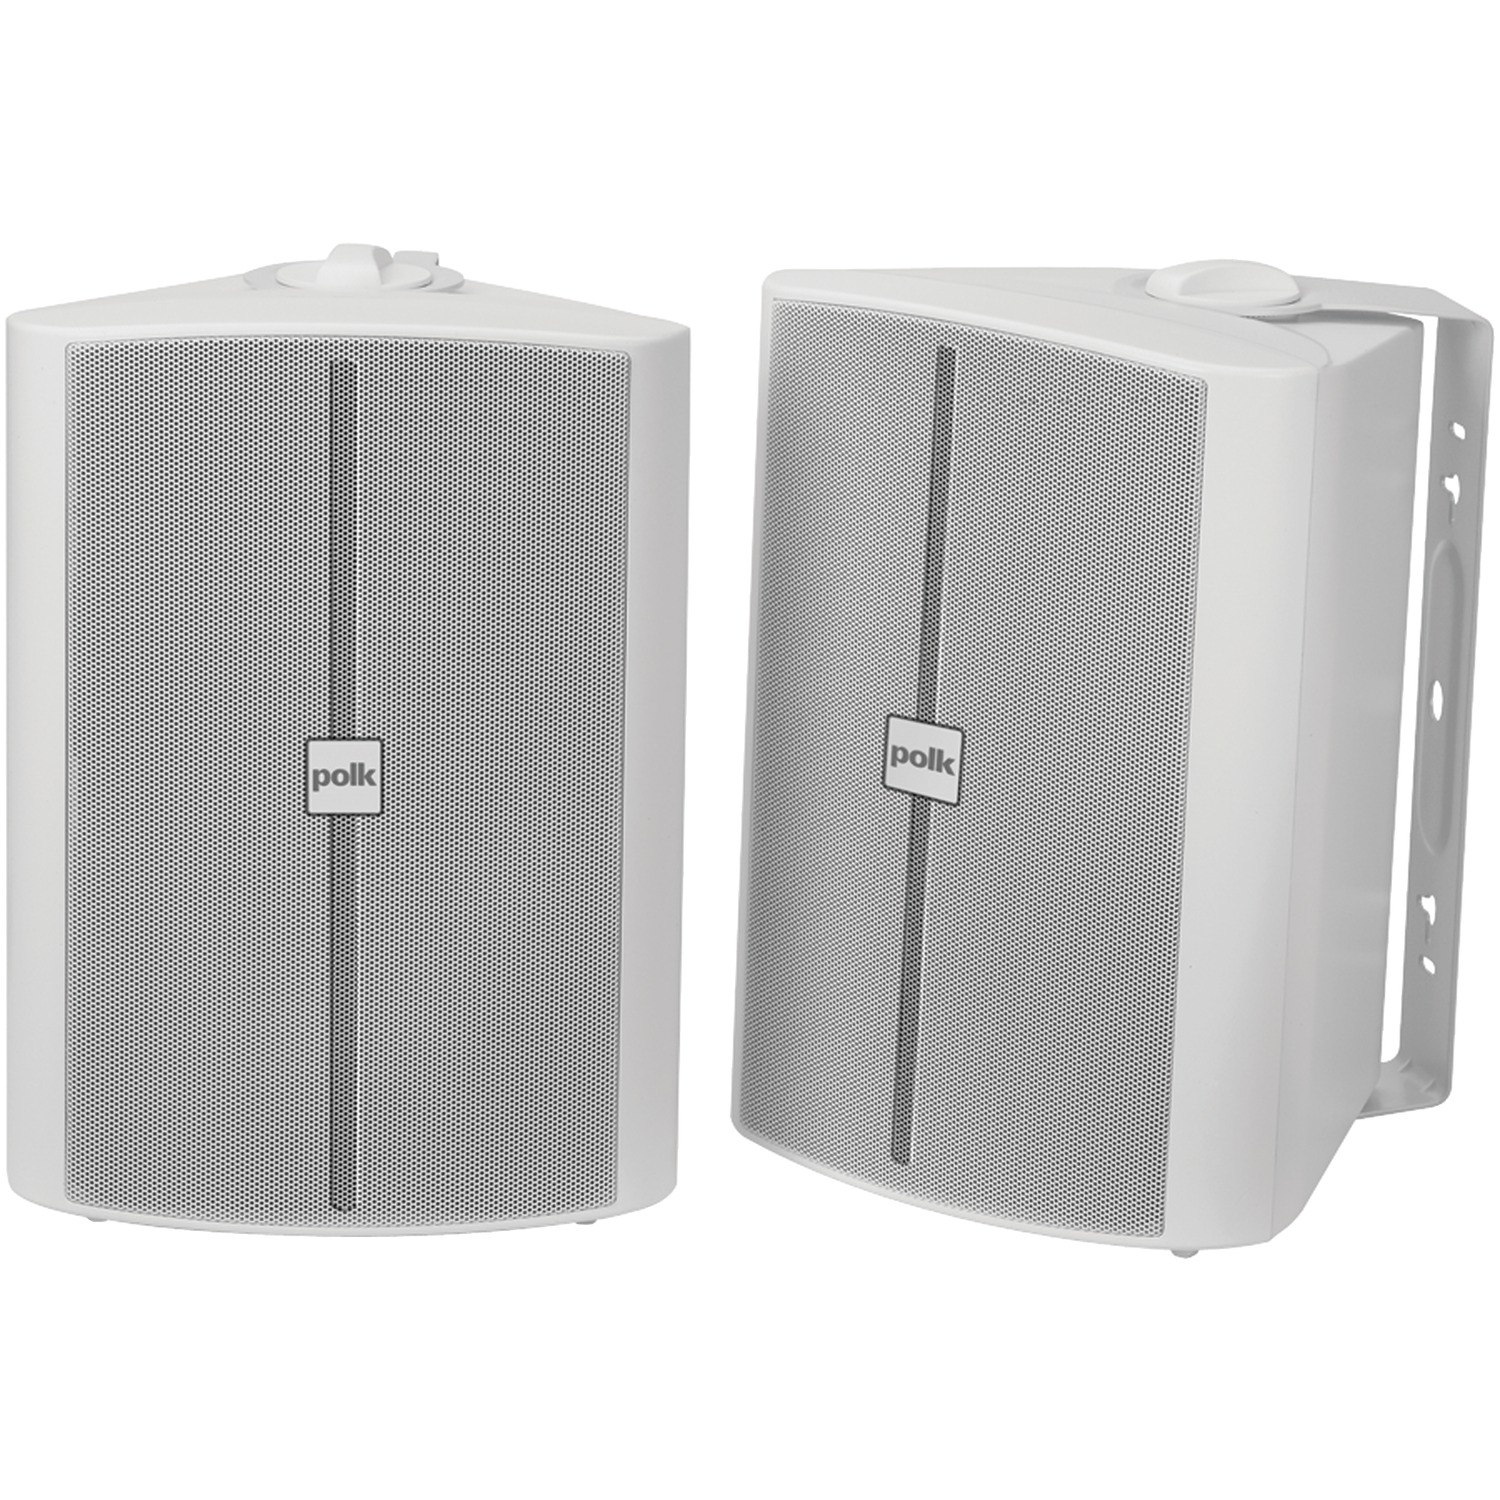 Polk Audio OS70 2-Way Indoor/Outdoor Speakers (Pair, White) - image 1 of 3